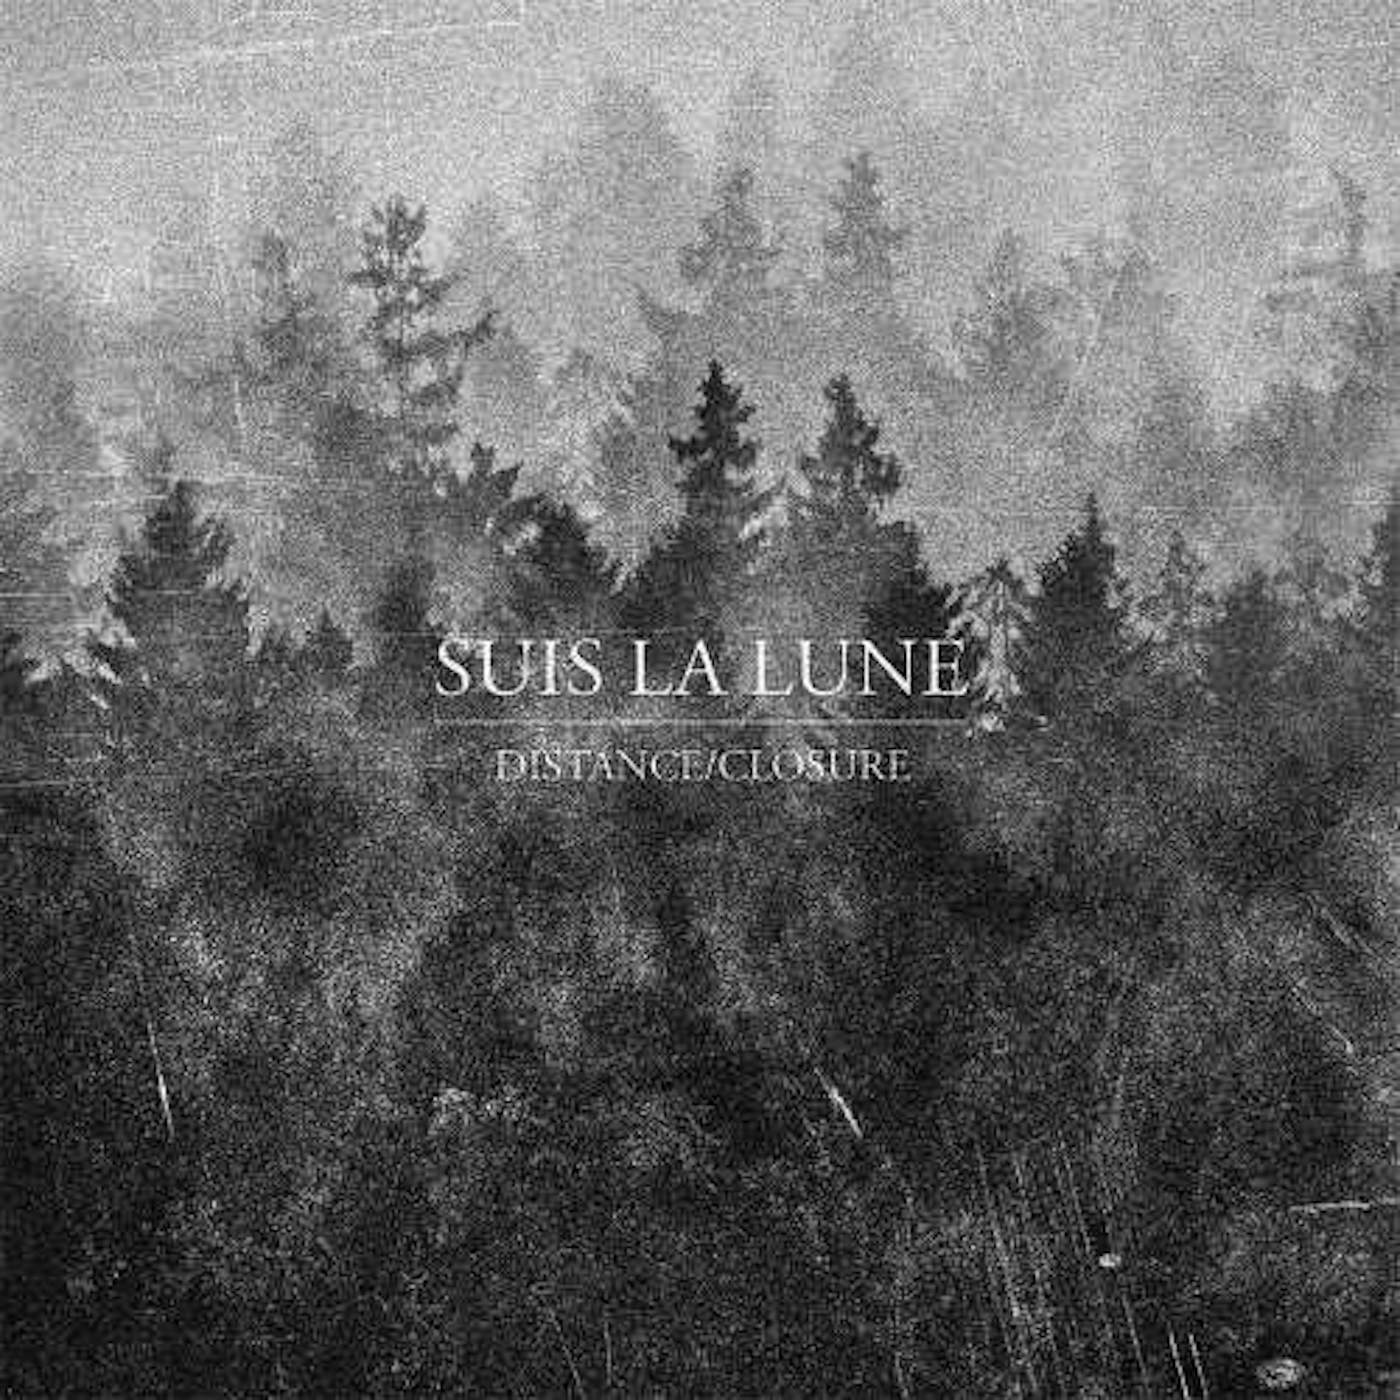 Suis La Lune Distance / Closure Vinyl Record